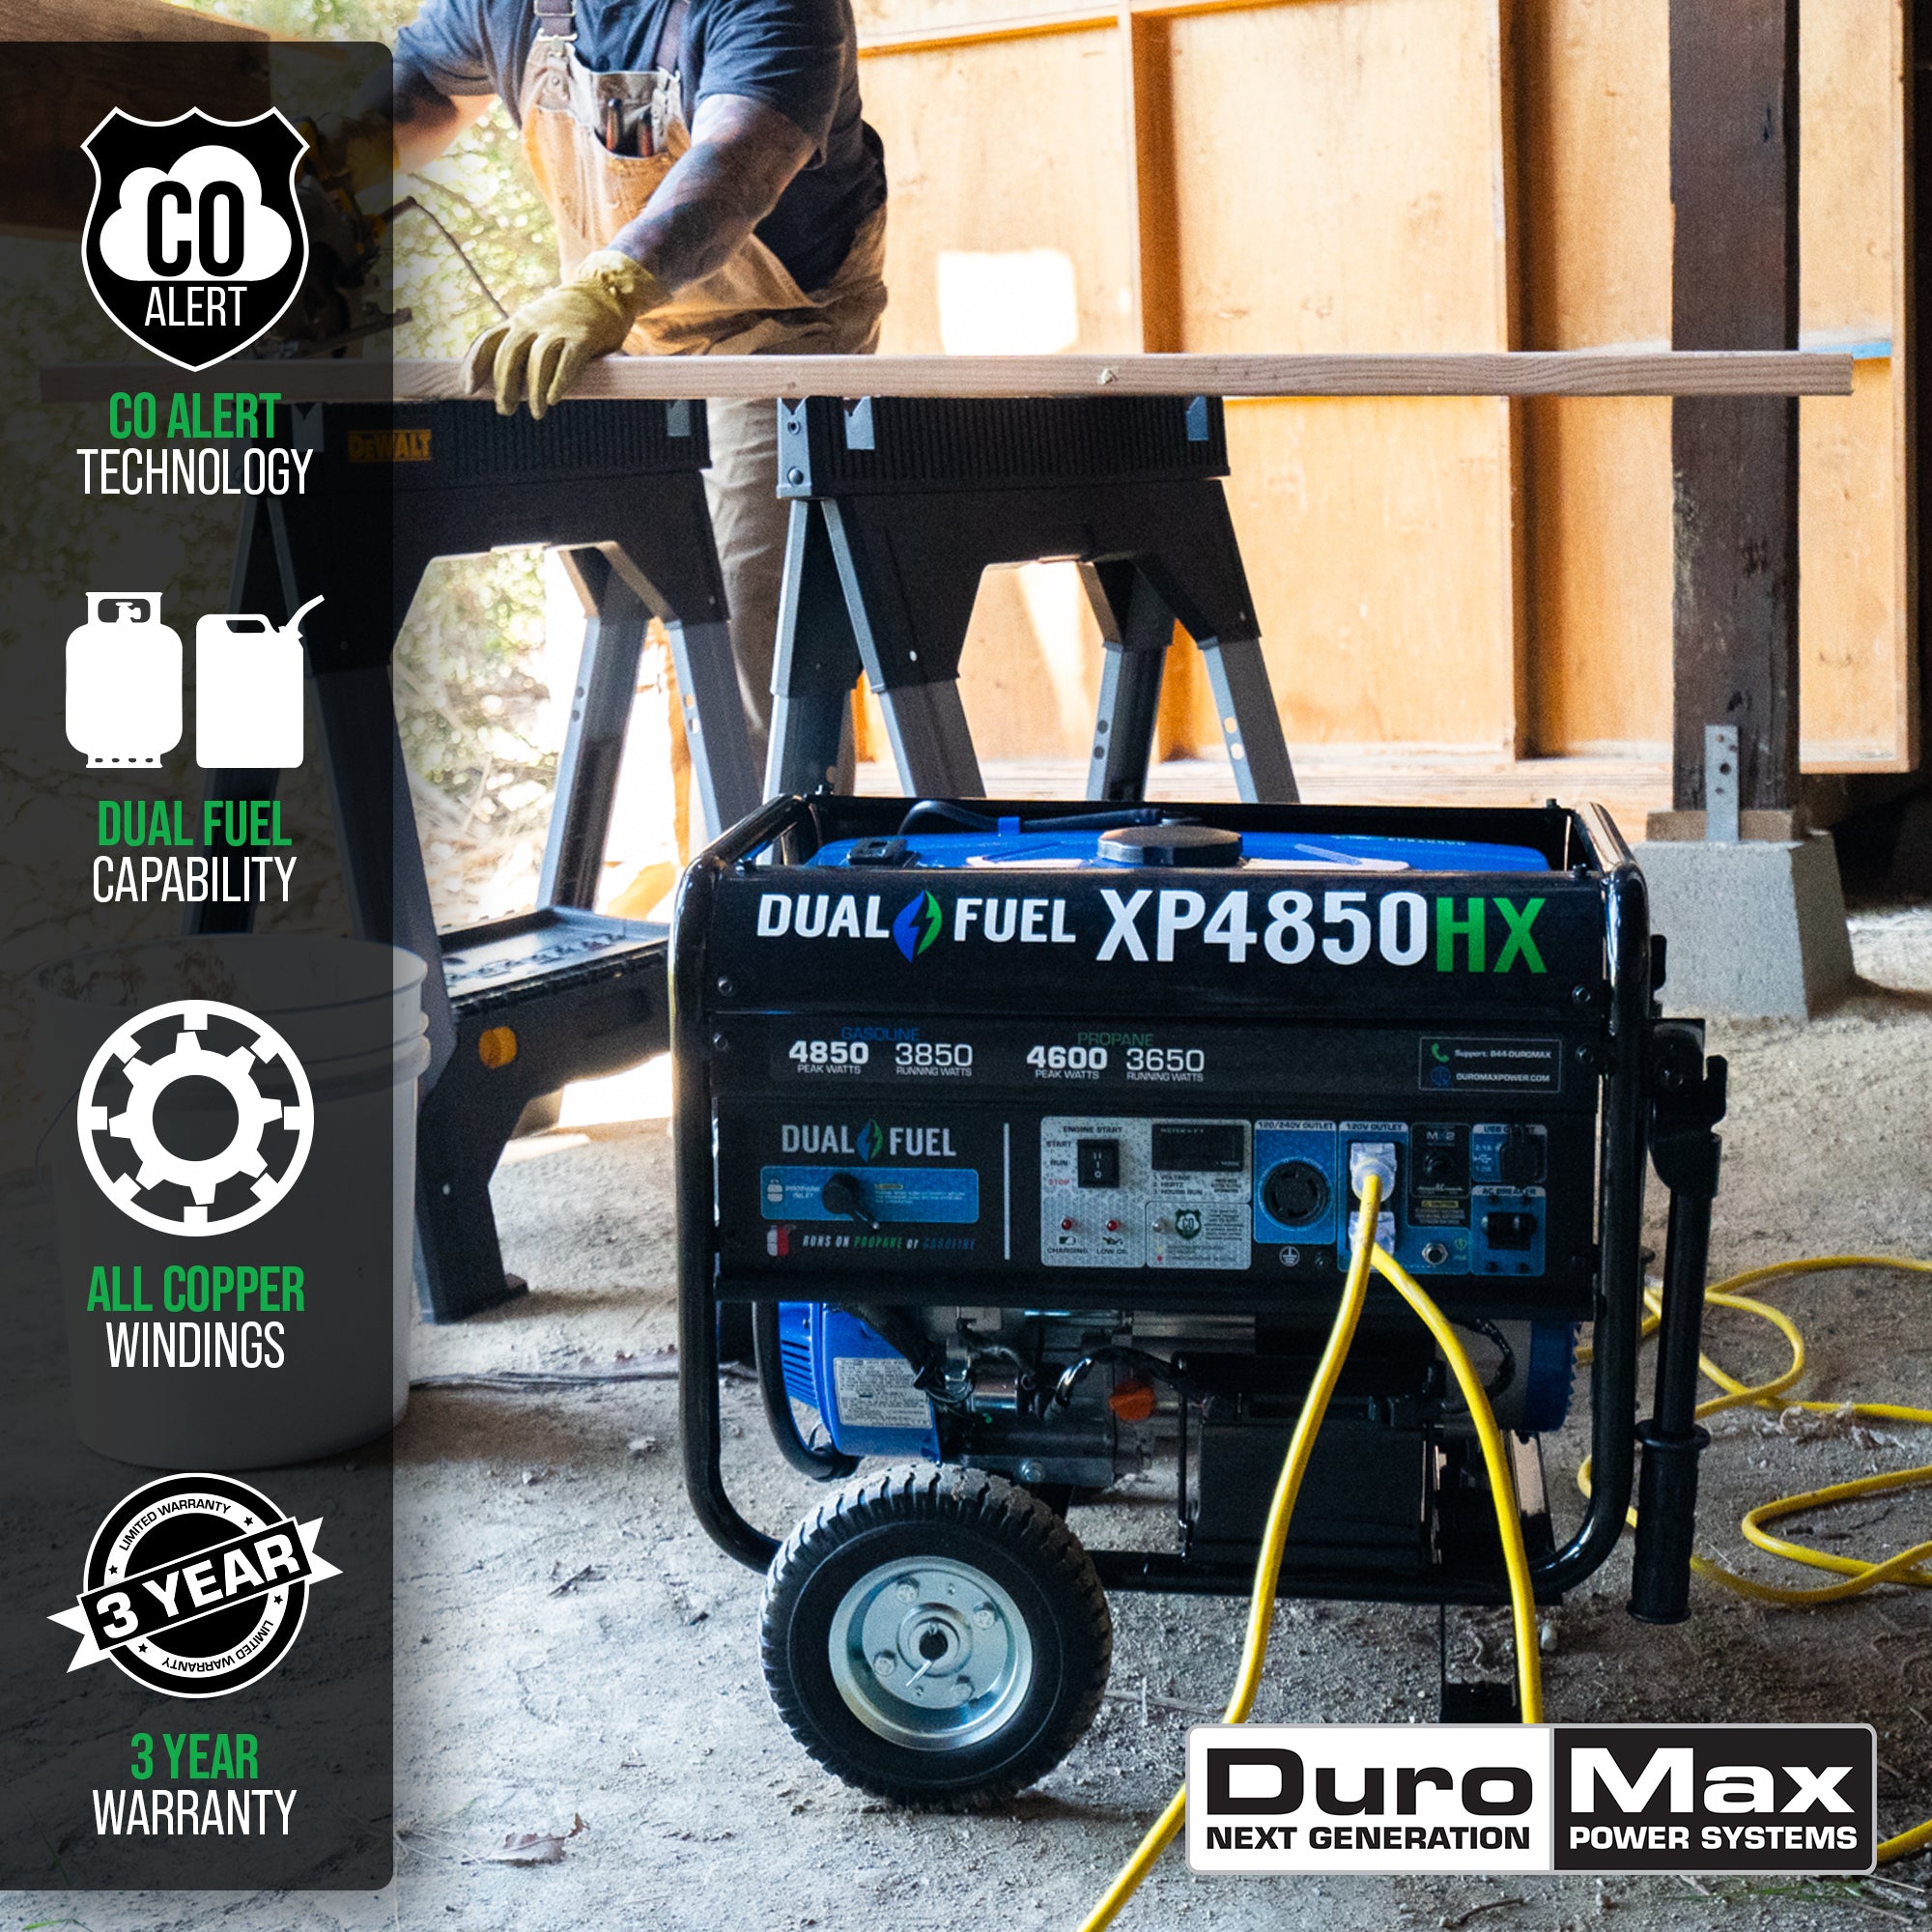 Duromax, DuroMax XP4850HX 3850W/4850W Dual Fuel CO Alert Electric Start Generator New